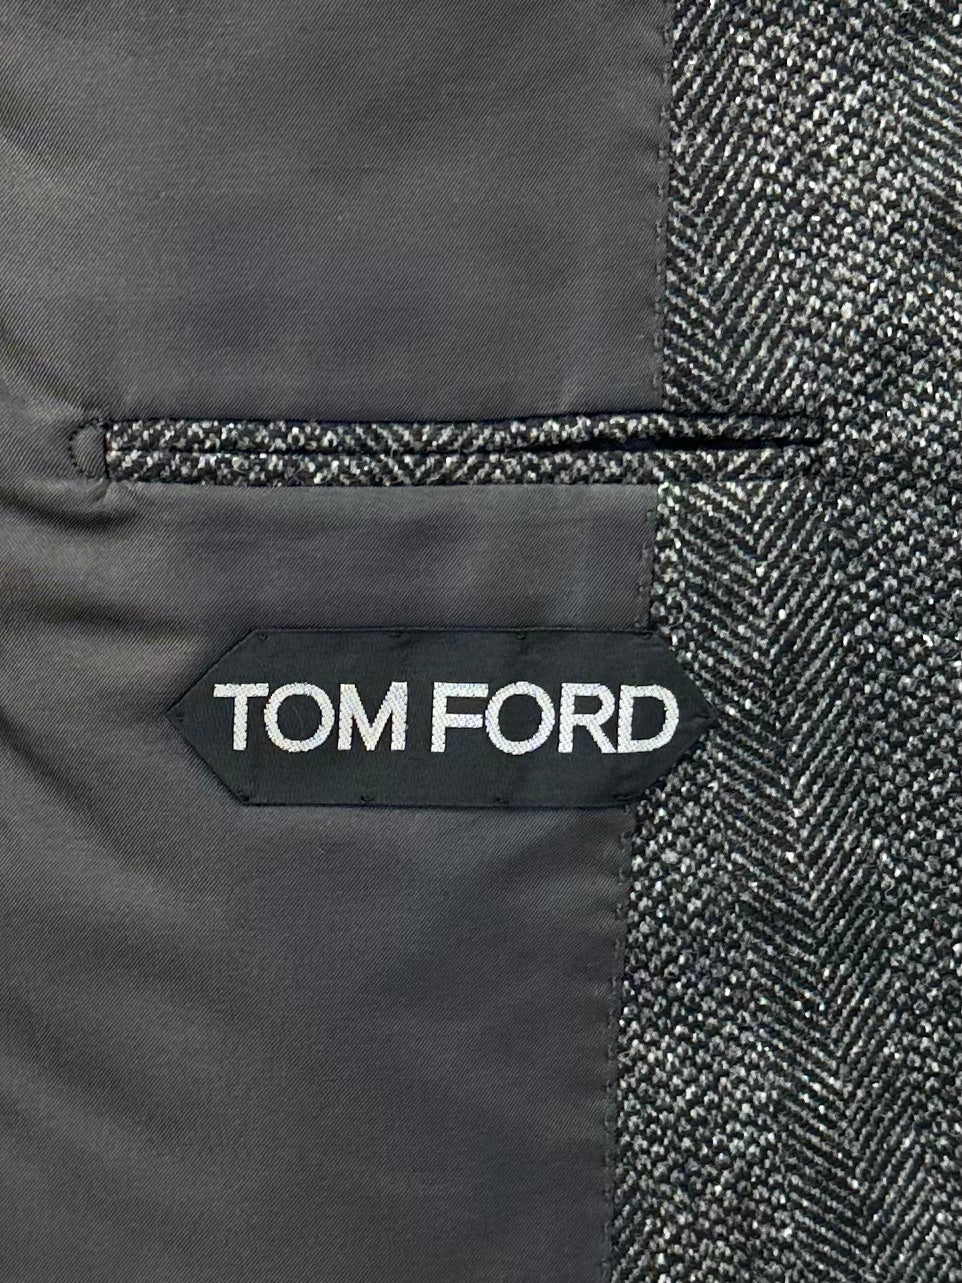 Tom Ford Grey Tweed Hunting Jacket